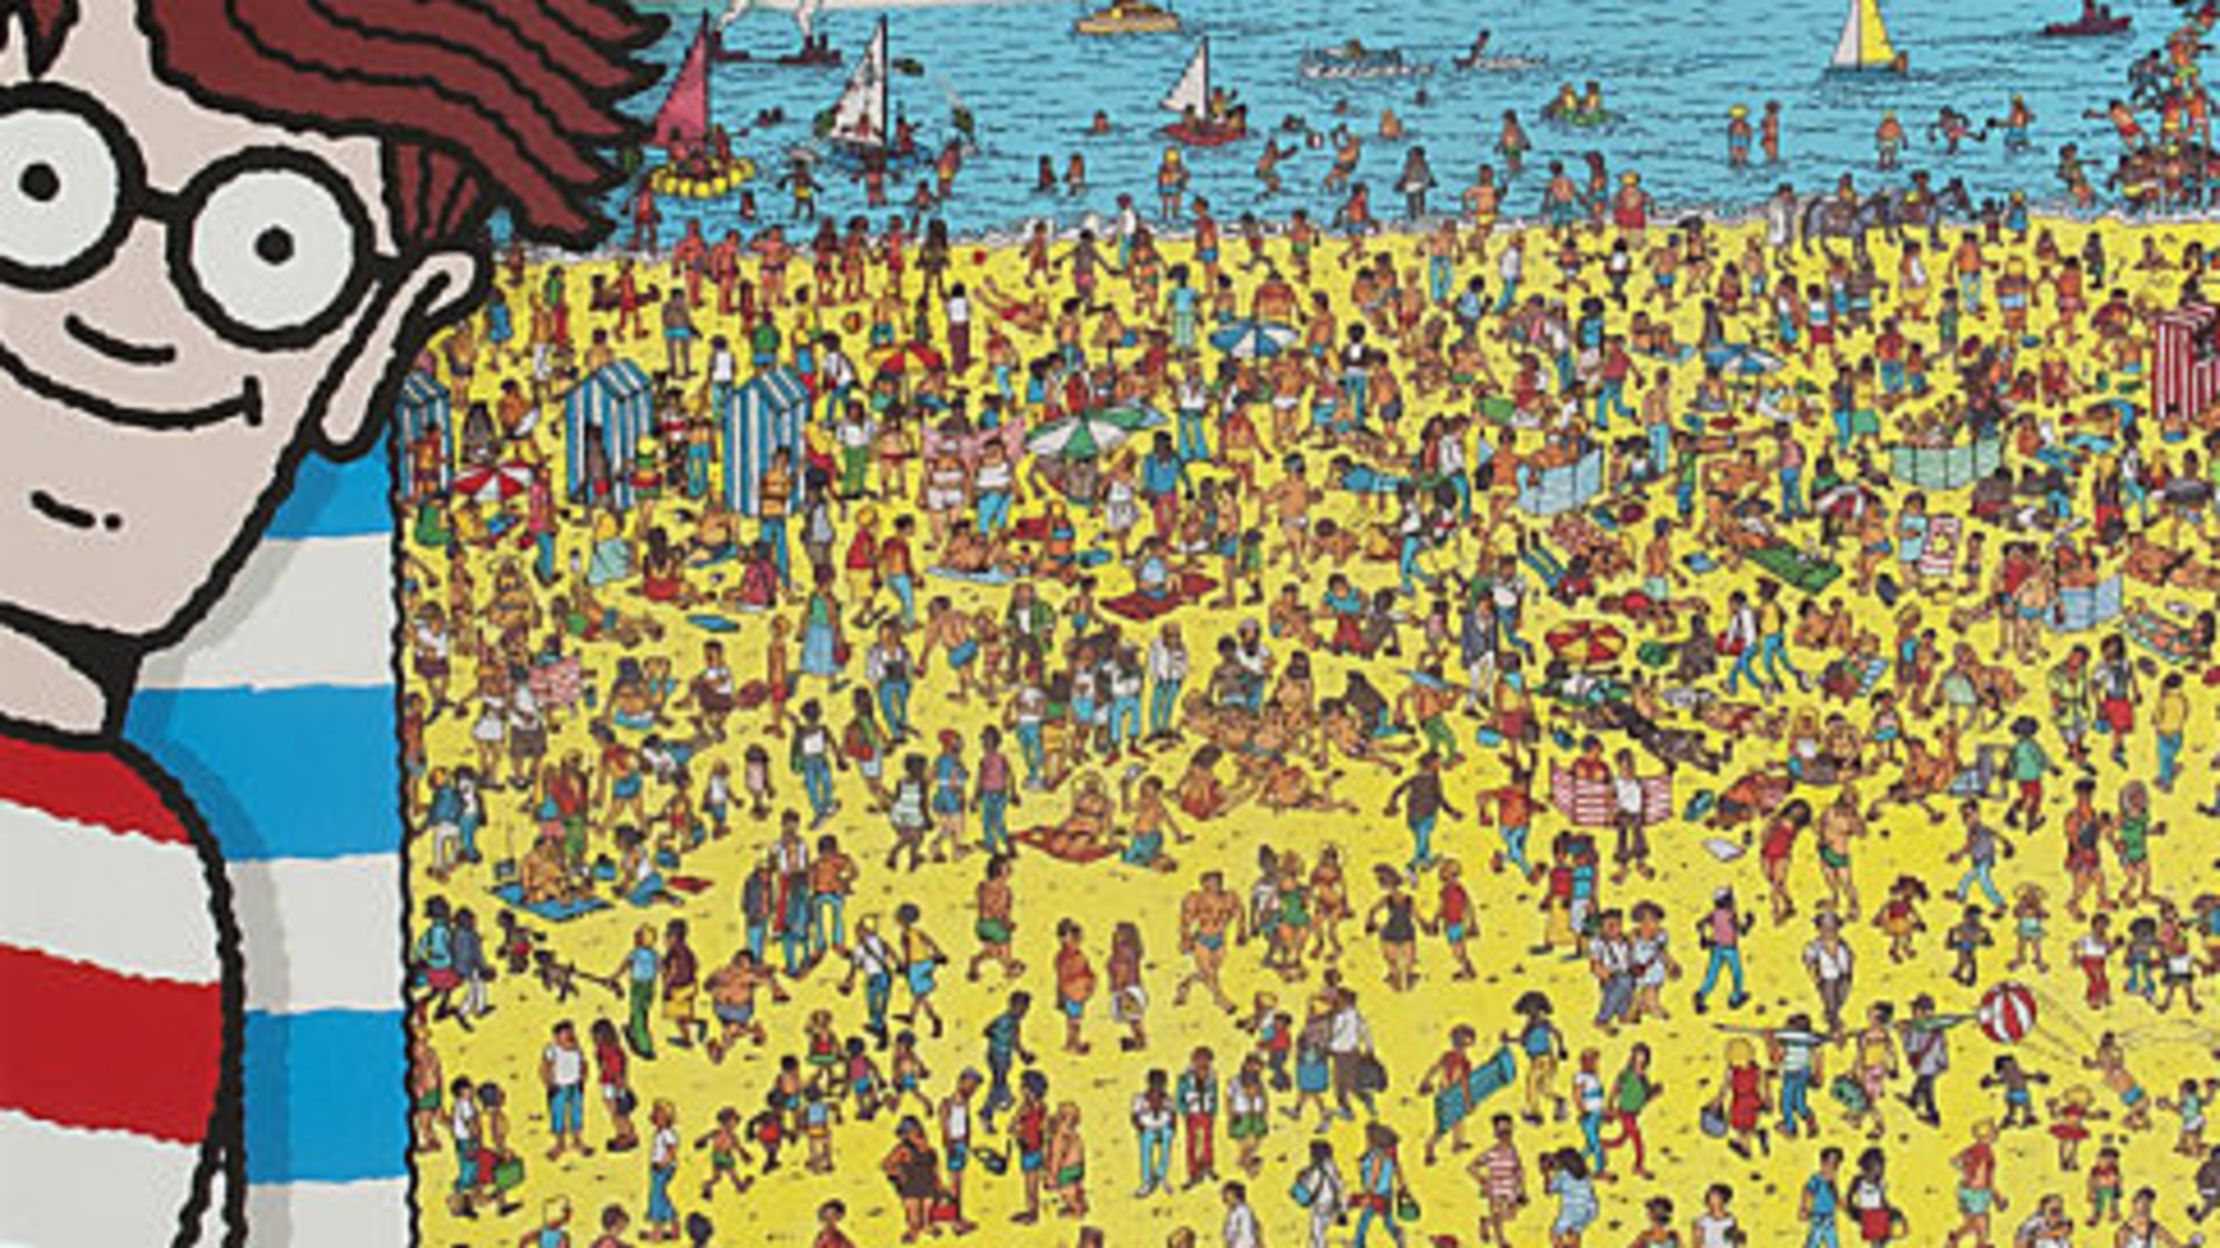 Beach Party Models Topless - Waldo's Topless Beach Scandal | Mental Floss